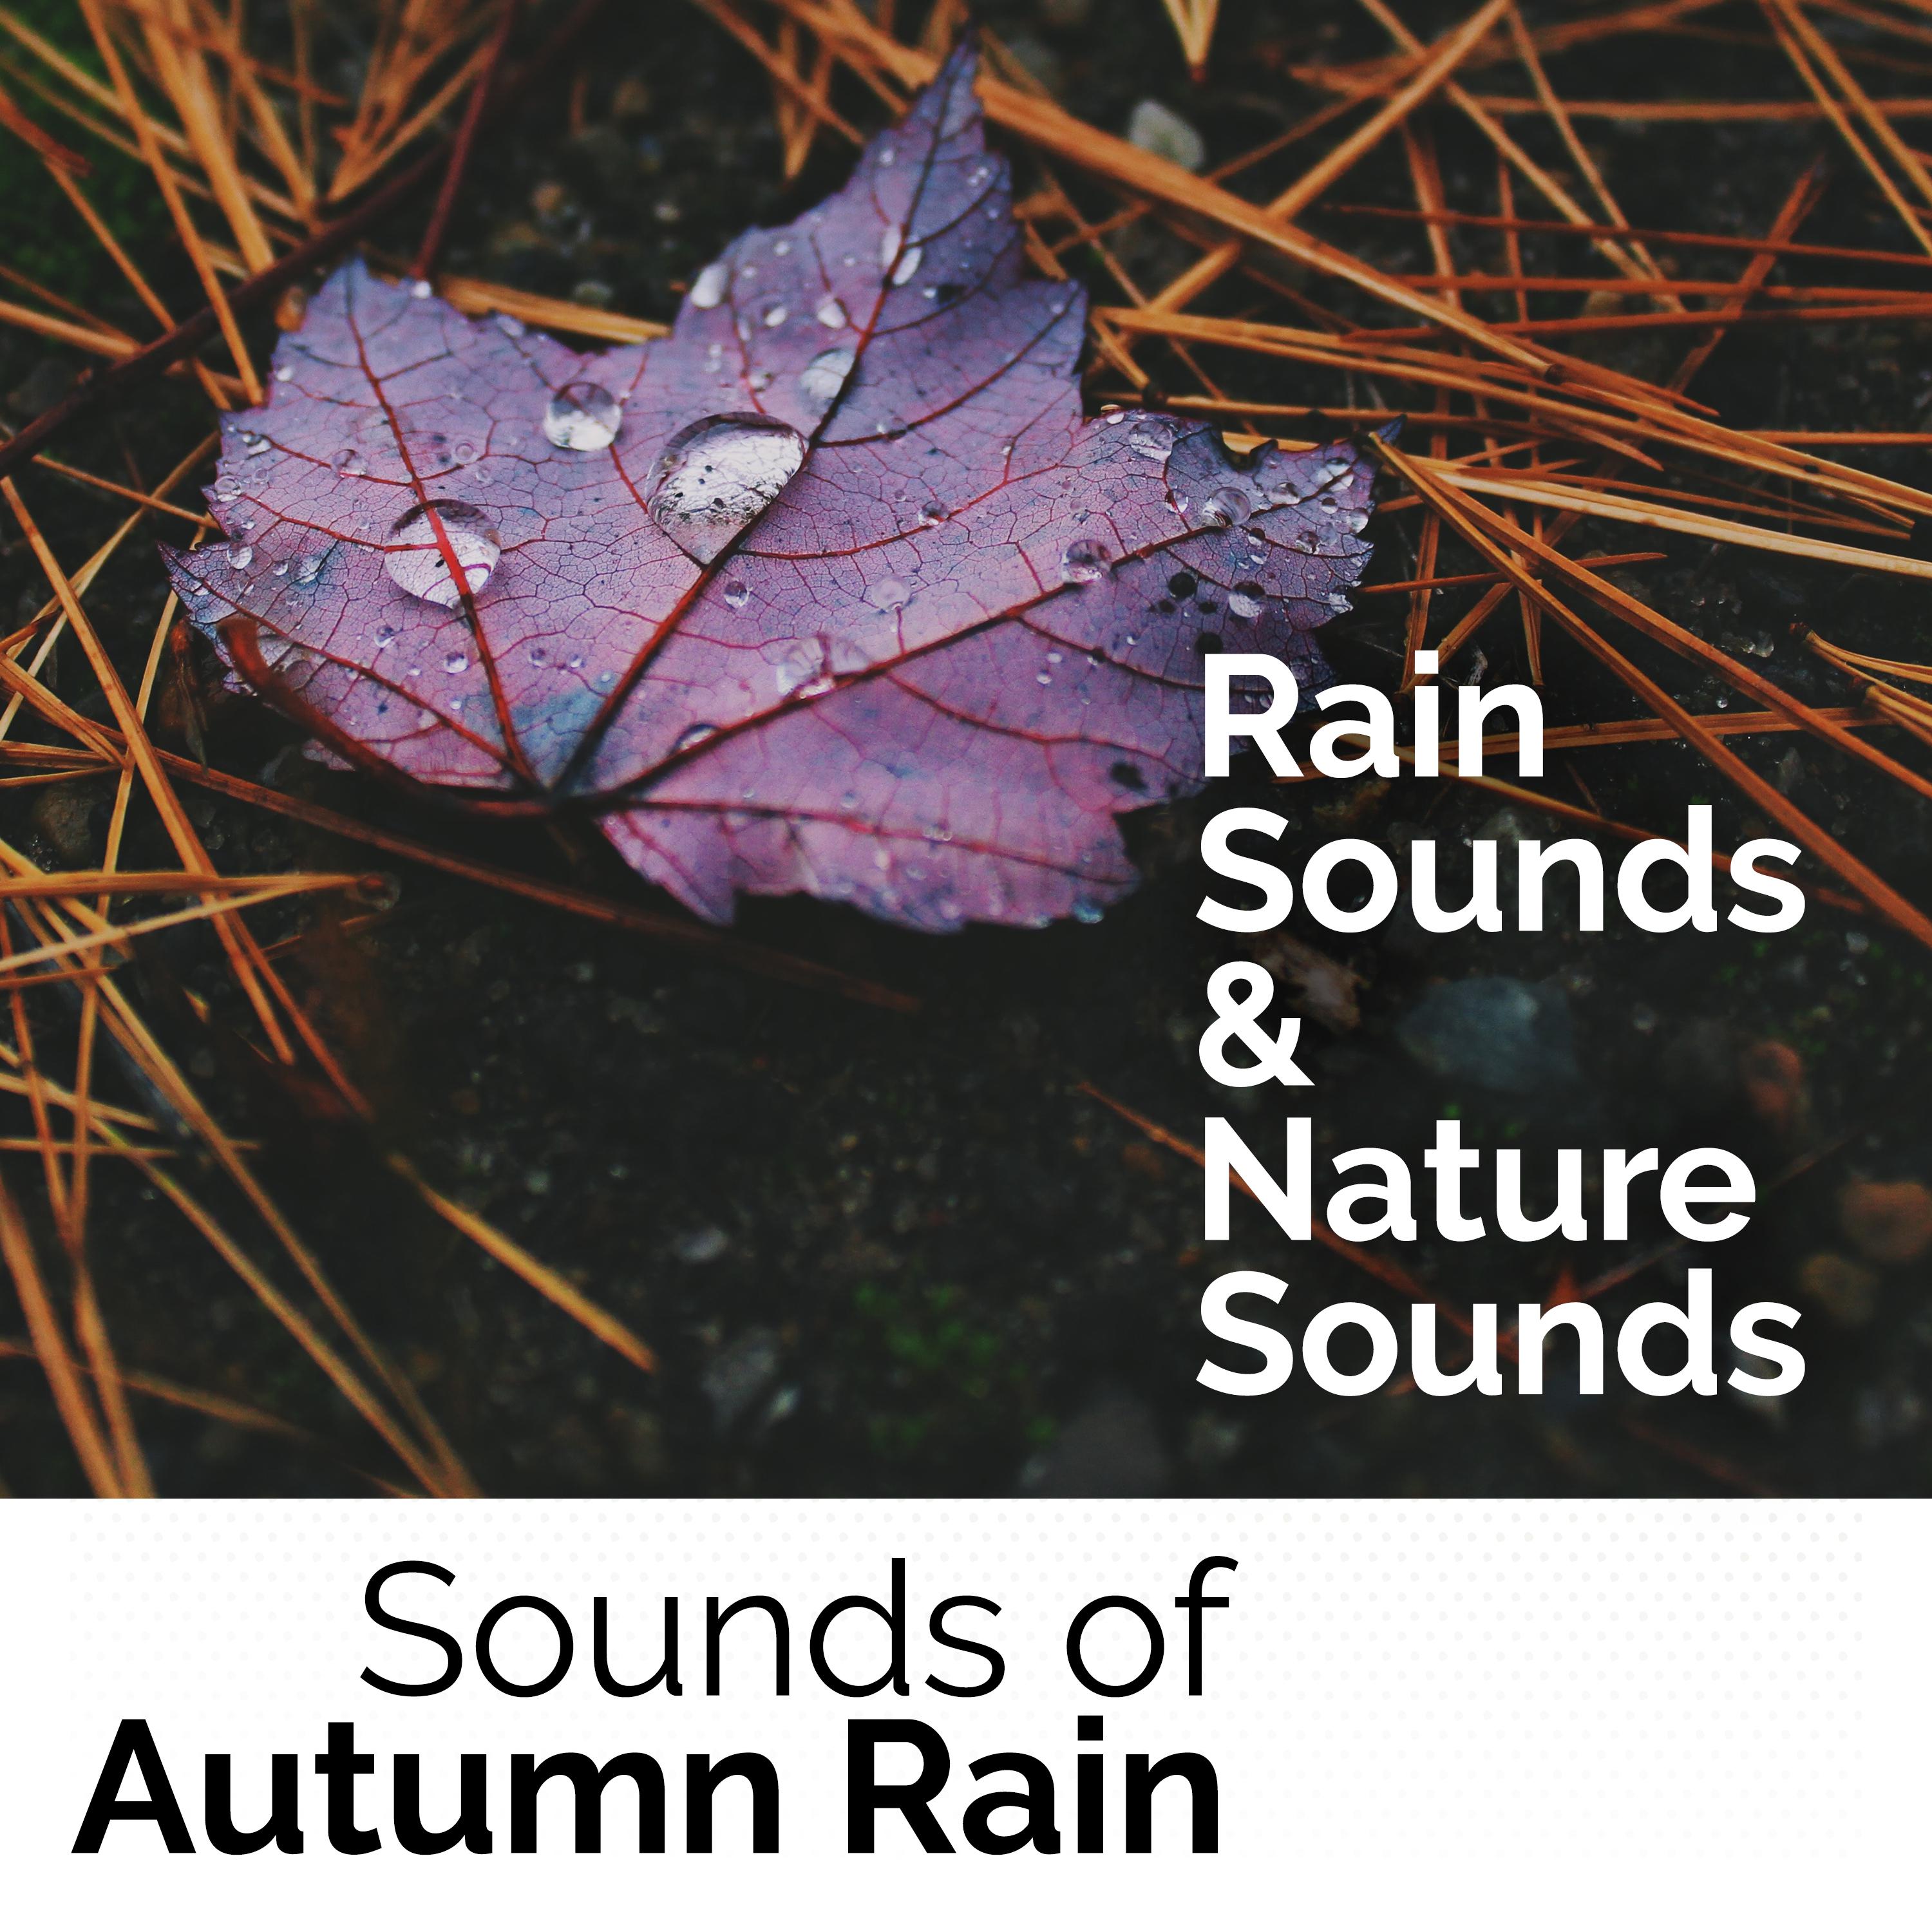 Sounds of Autumn Rain